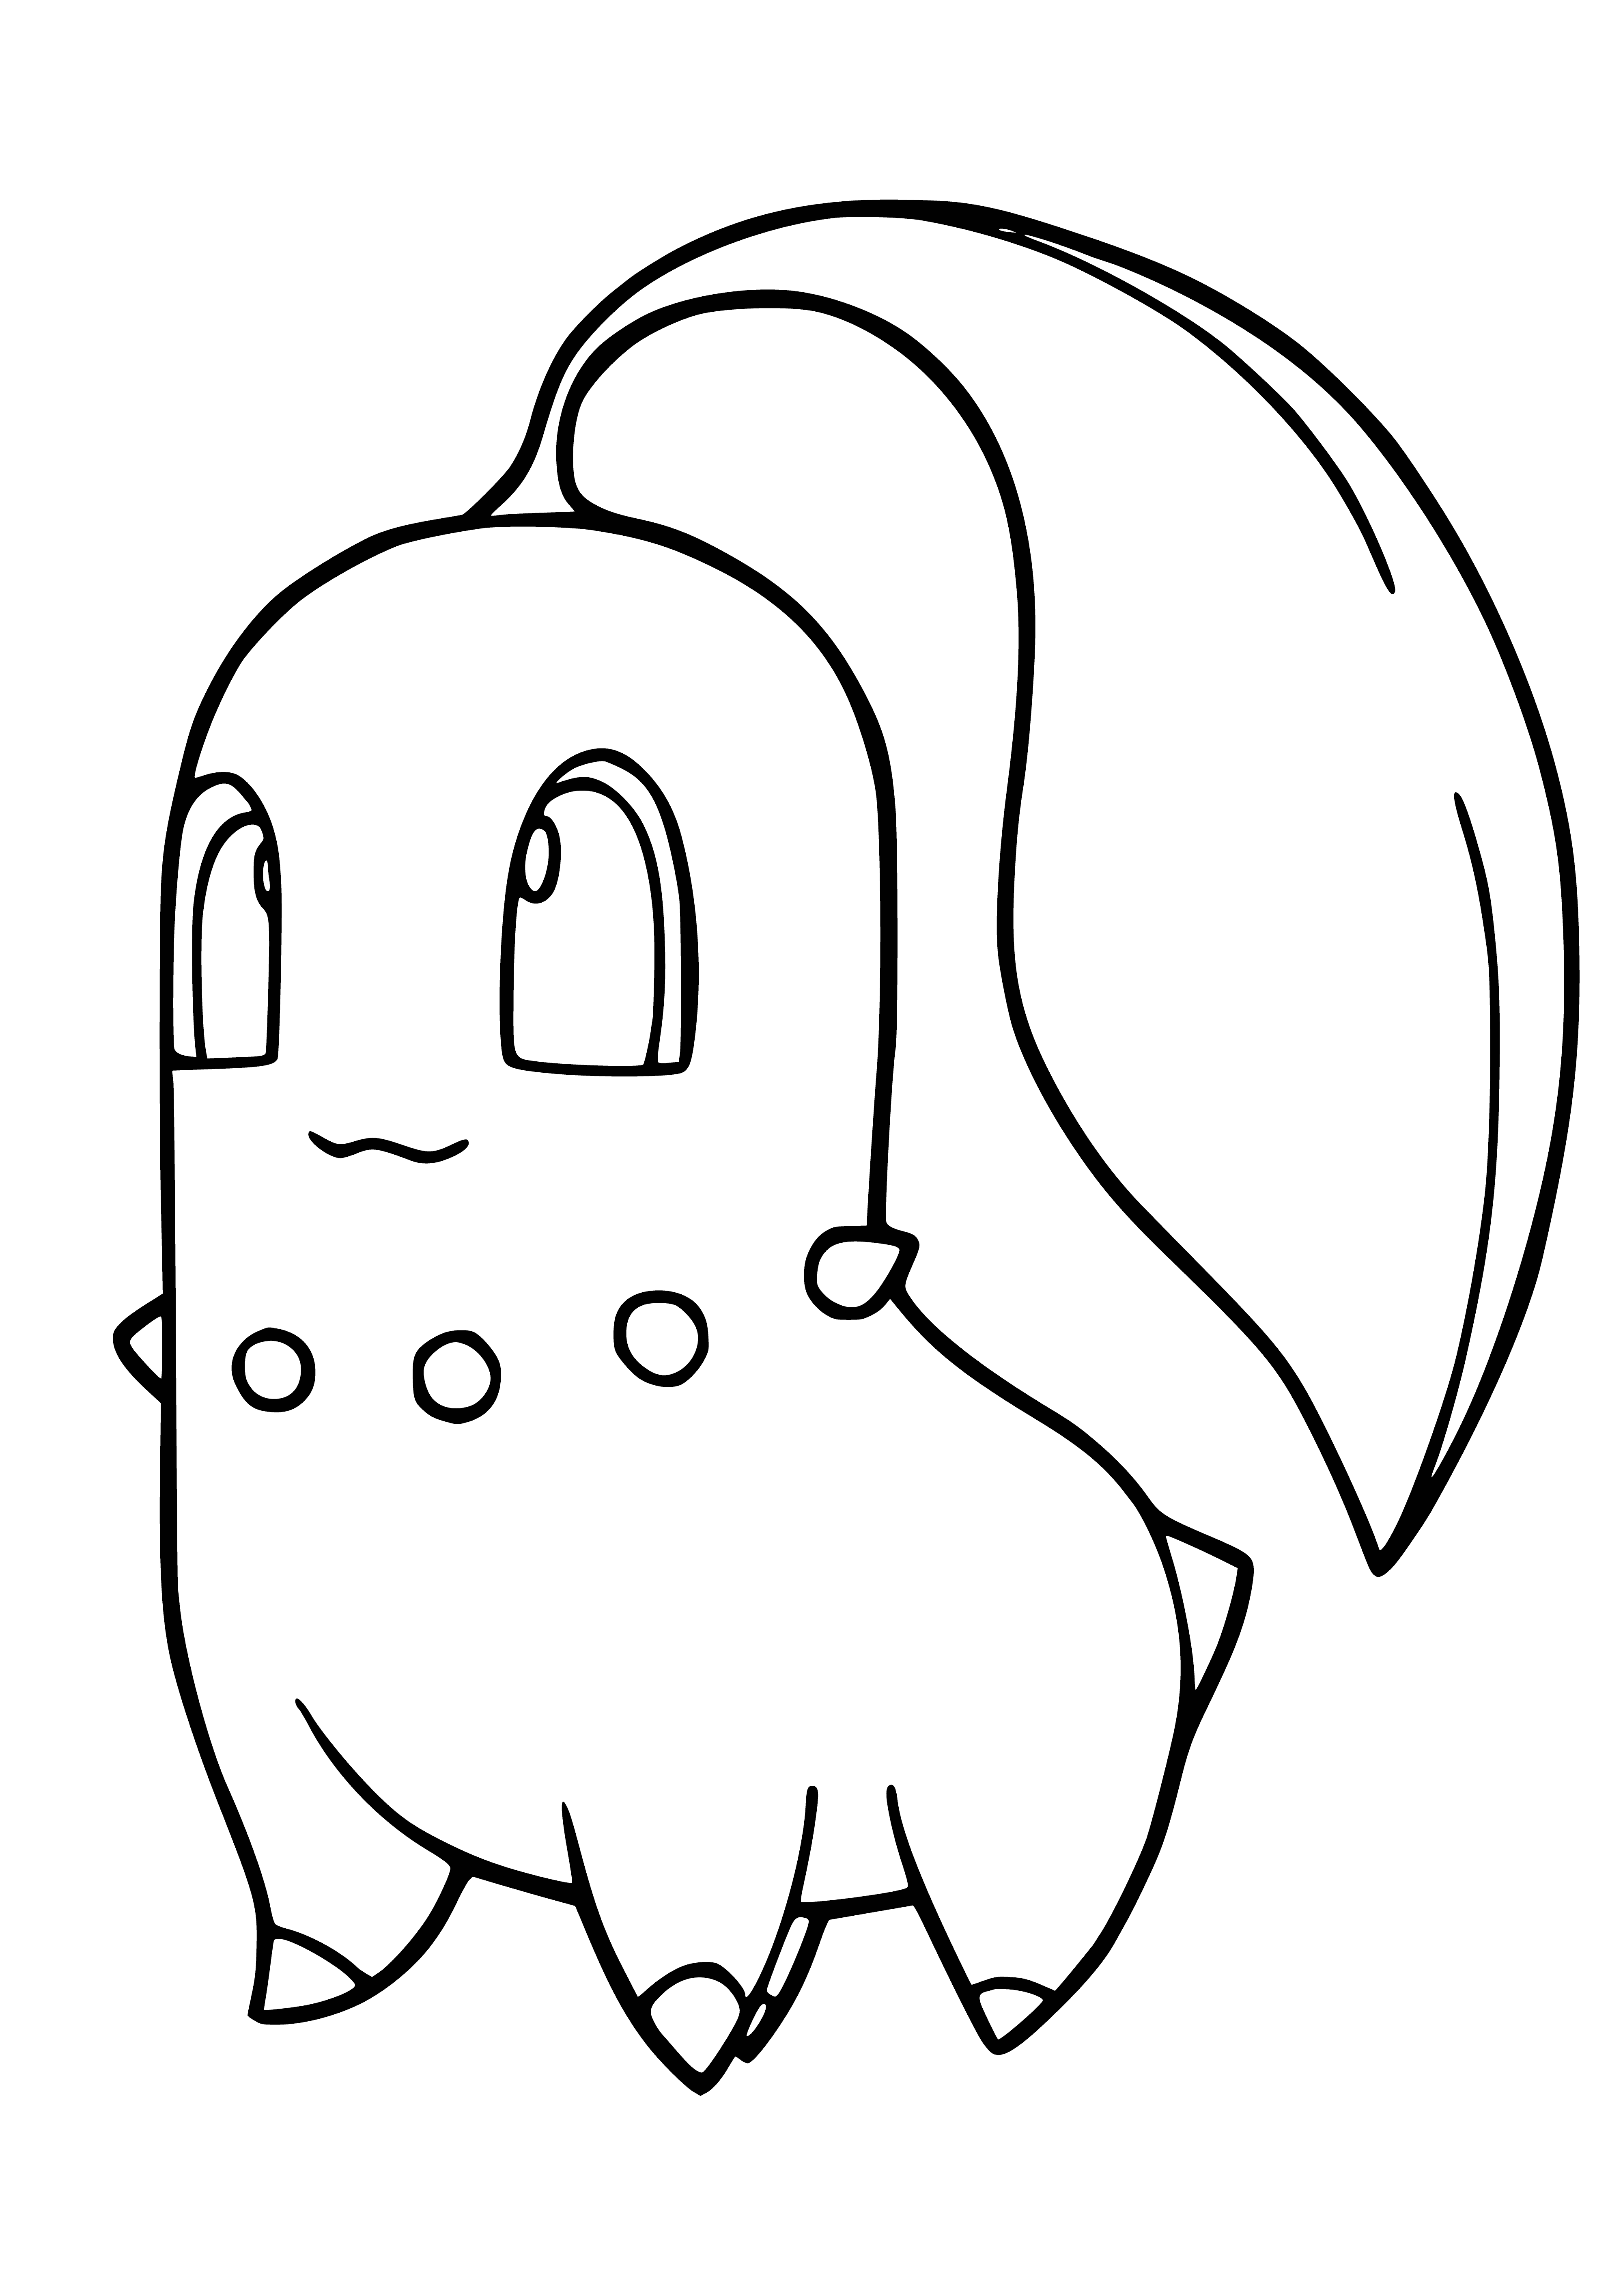 Pokemon Chicory coloring page